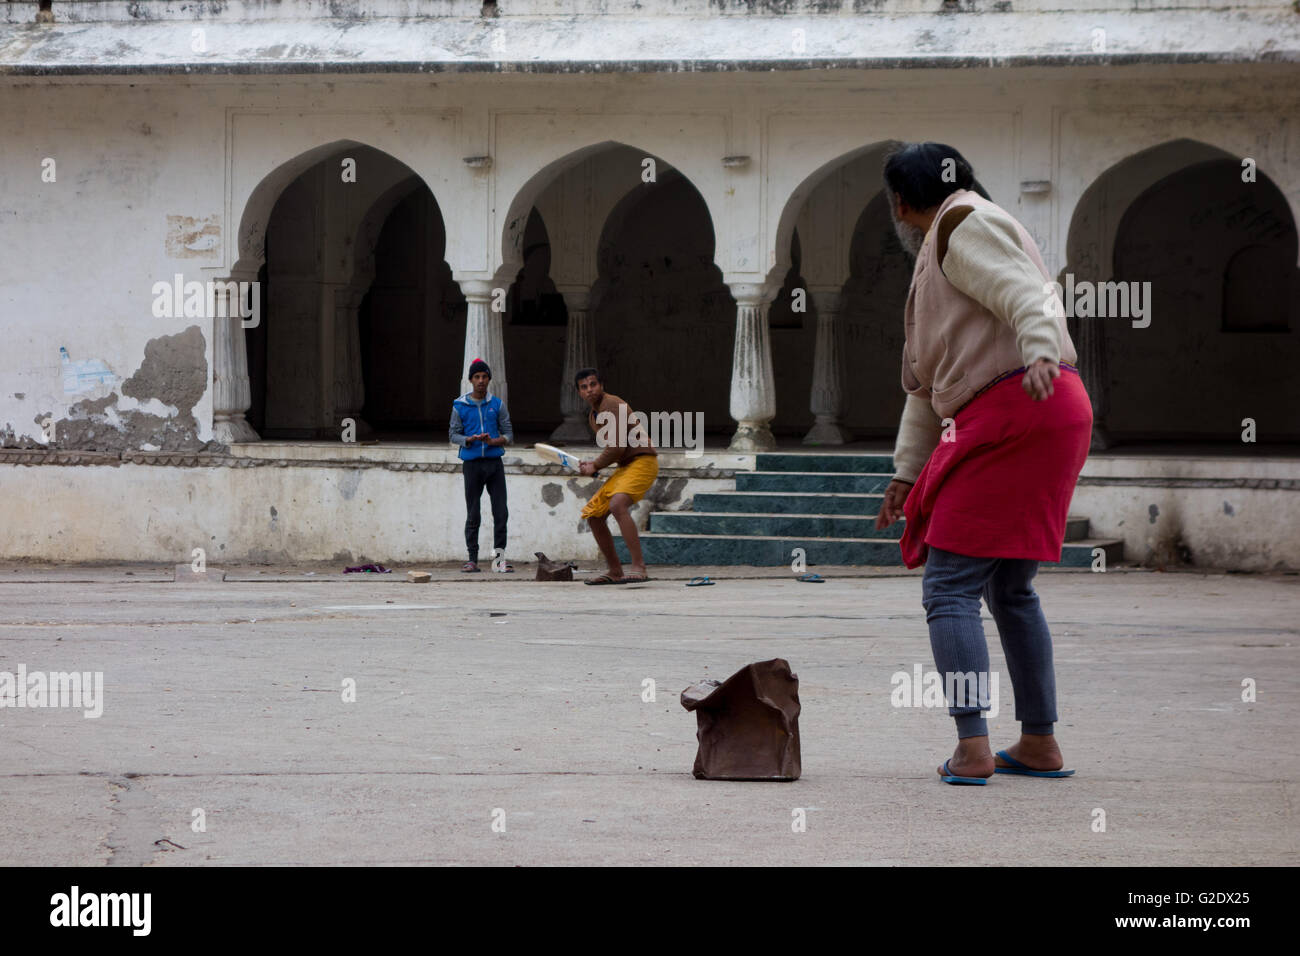 Männer spielen Cricket am Affentempel, Jaipur, Indien Stockfoto